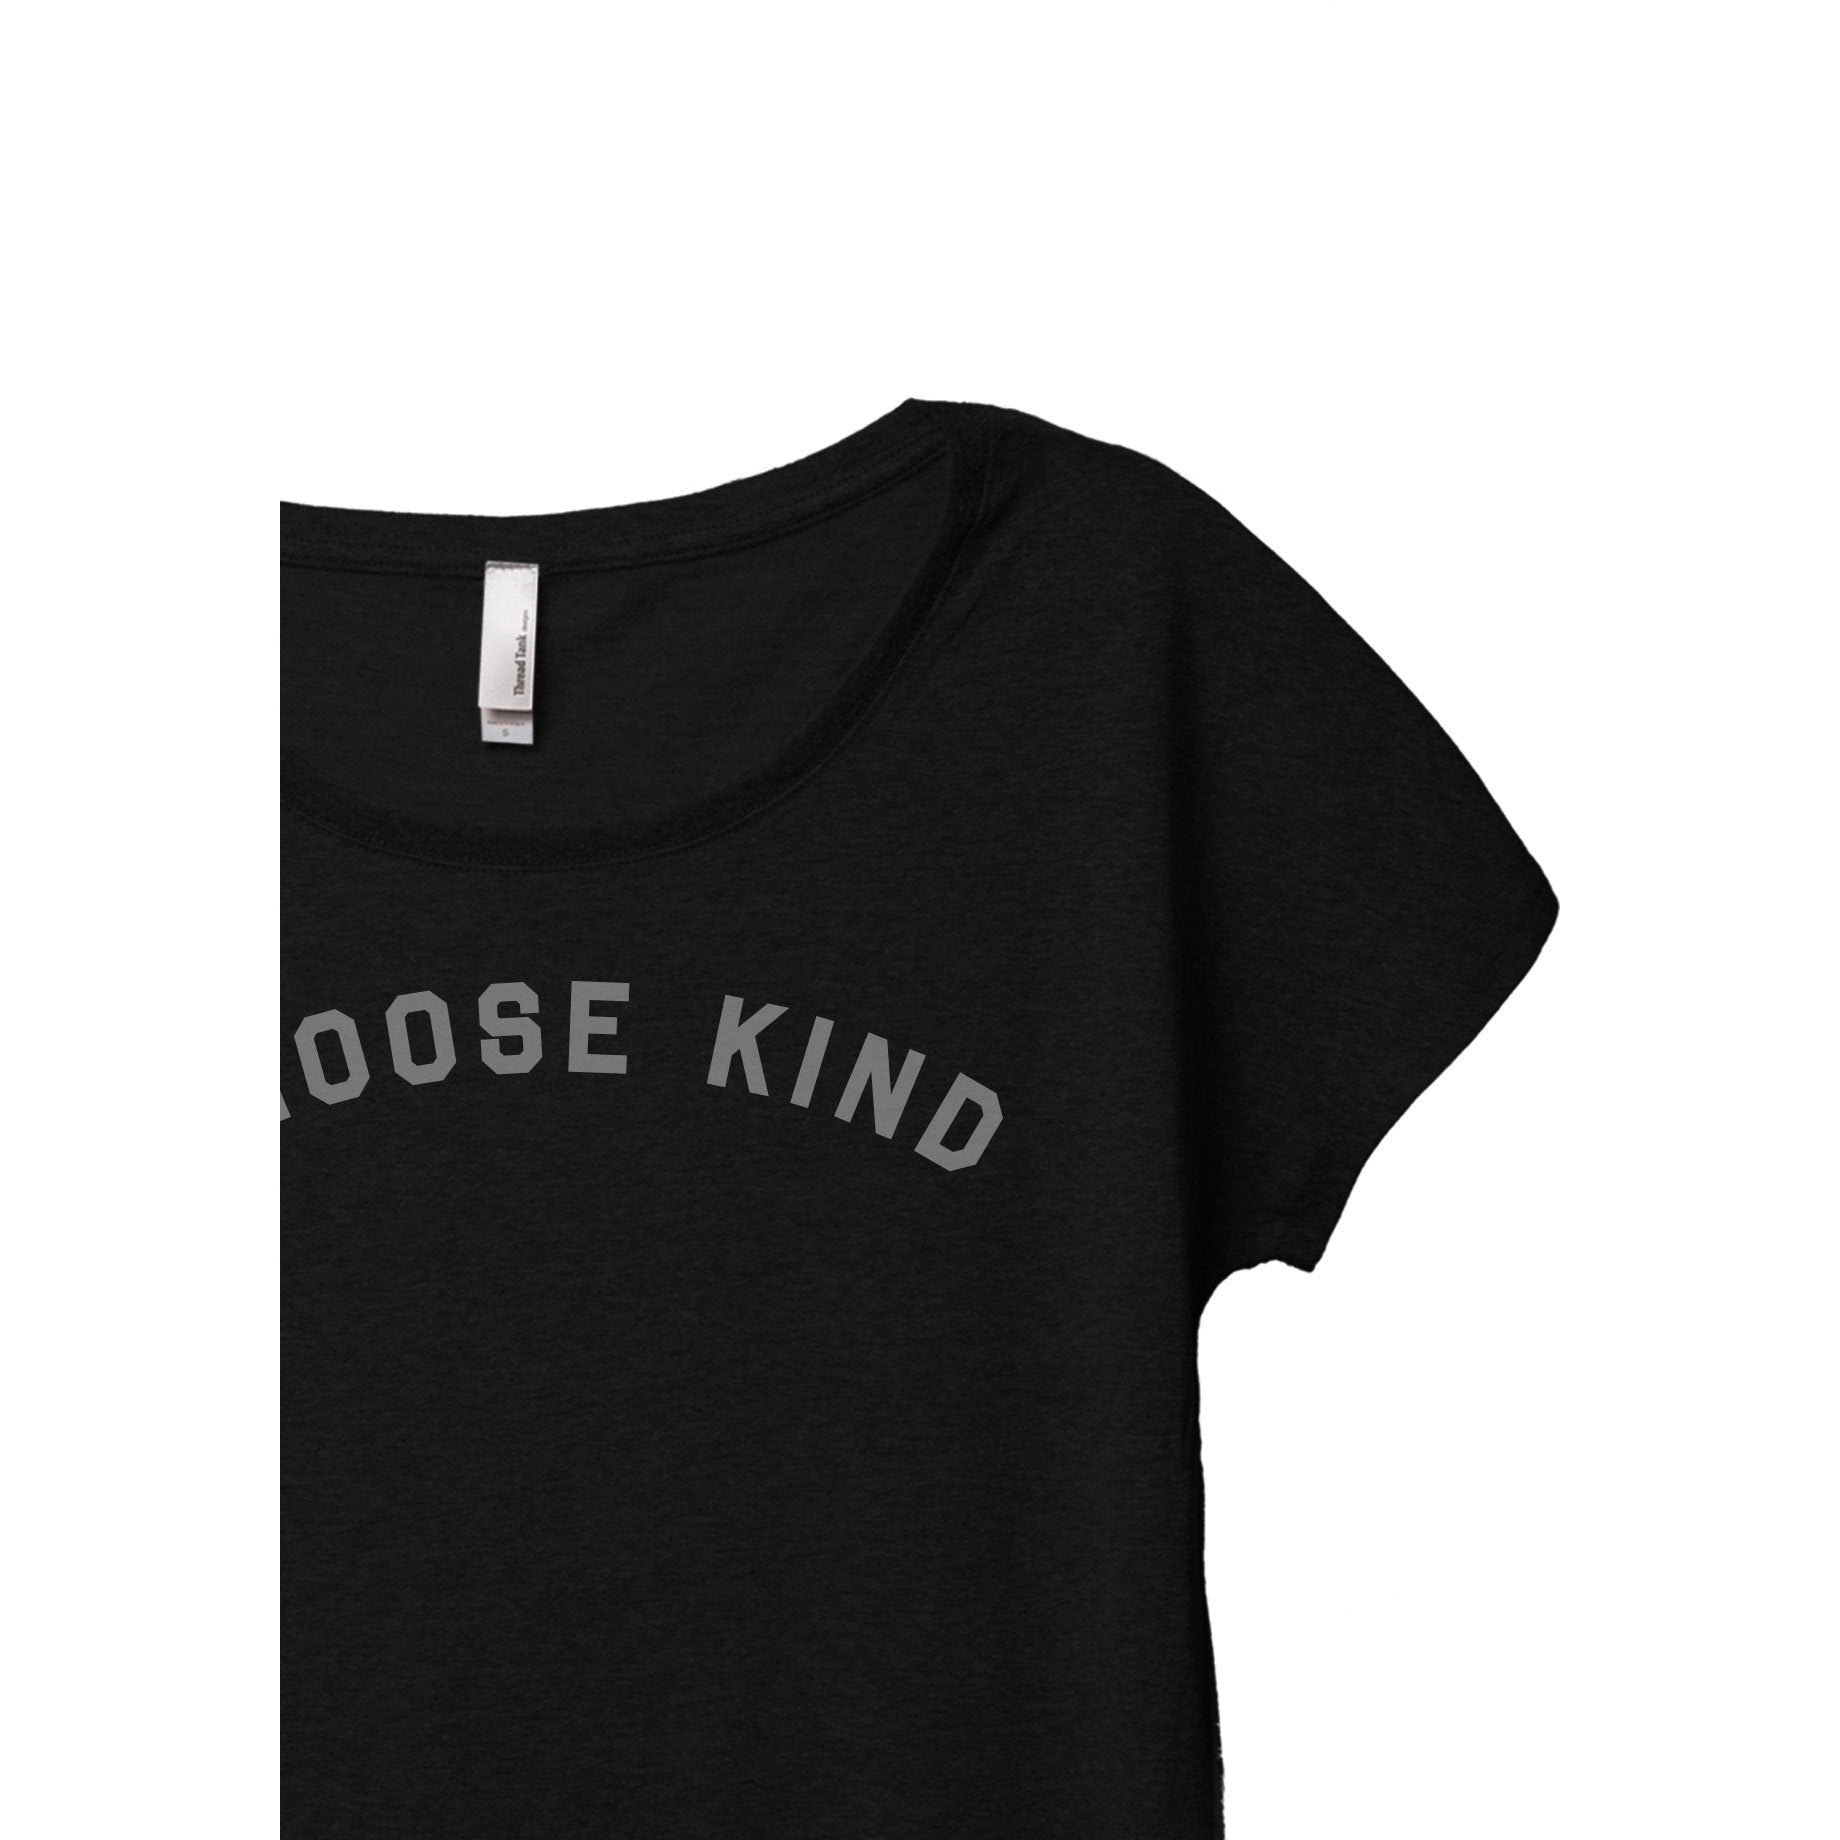 Choose Kind Women's Relaxed Slouchy Dolman T-Shirt Tee Heather Black Closeup Details